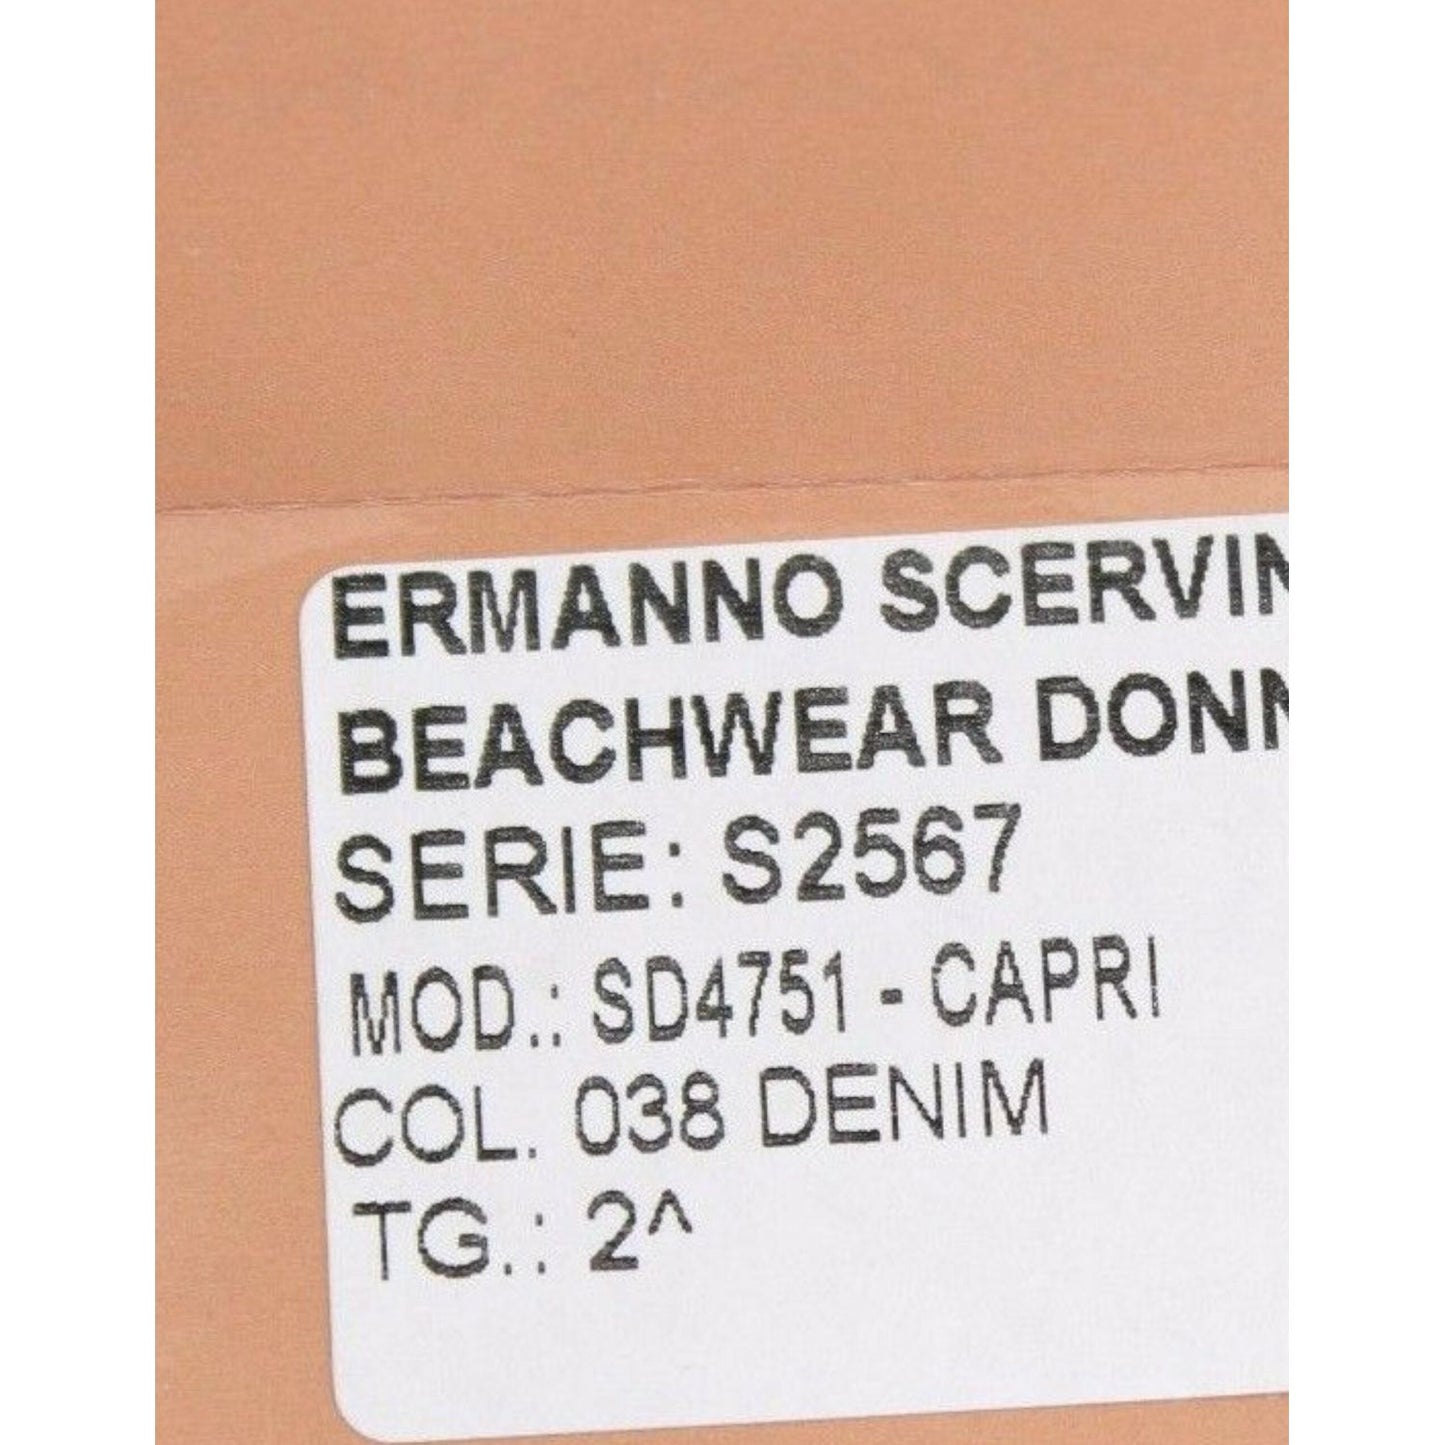 Ermanno Scervino Beachwear Blue Jeans Capri Pants Cropped beachwear-blue-jeans-capri-pants-cropped Jeans & Pants 36181-ermanno-scervino-beachwear-blue-jeans-capri-pants-cropped-4-scaled-1d47da91-617.jpg